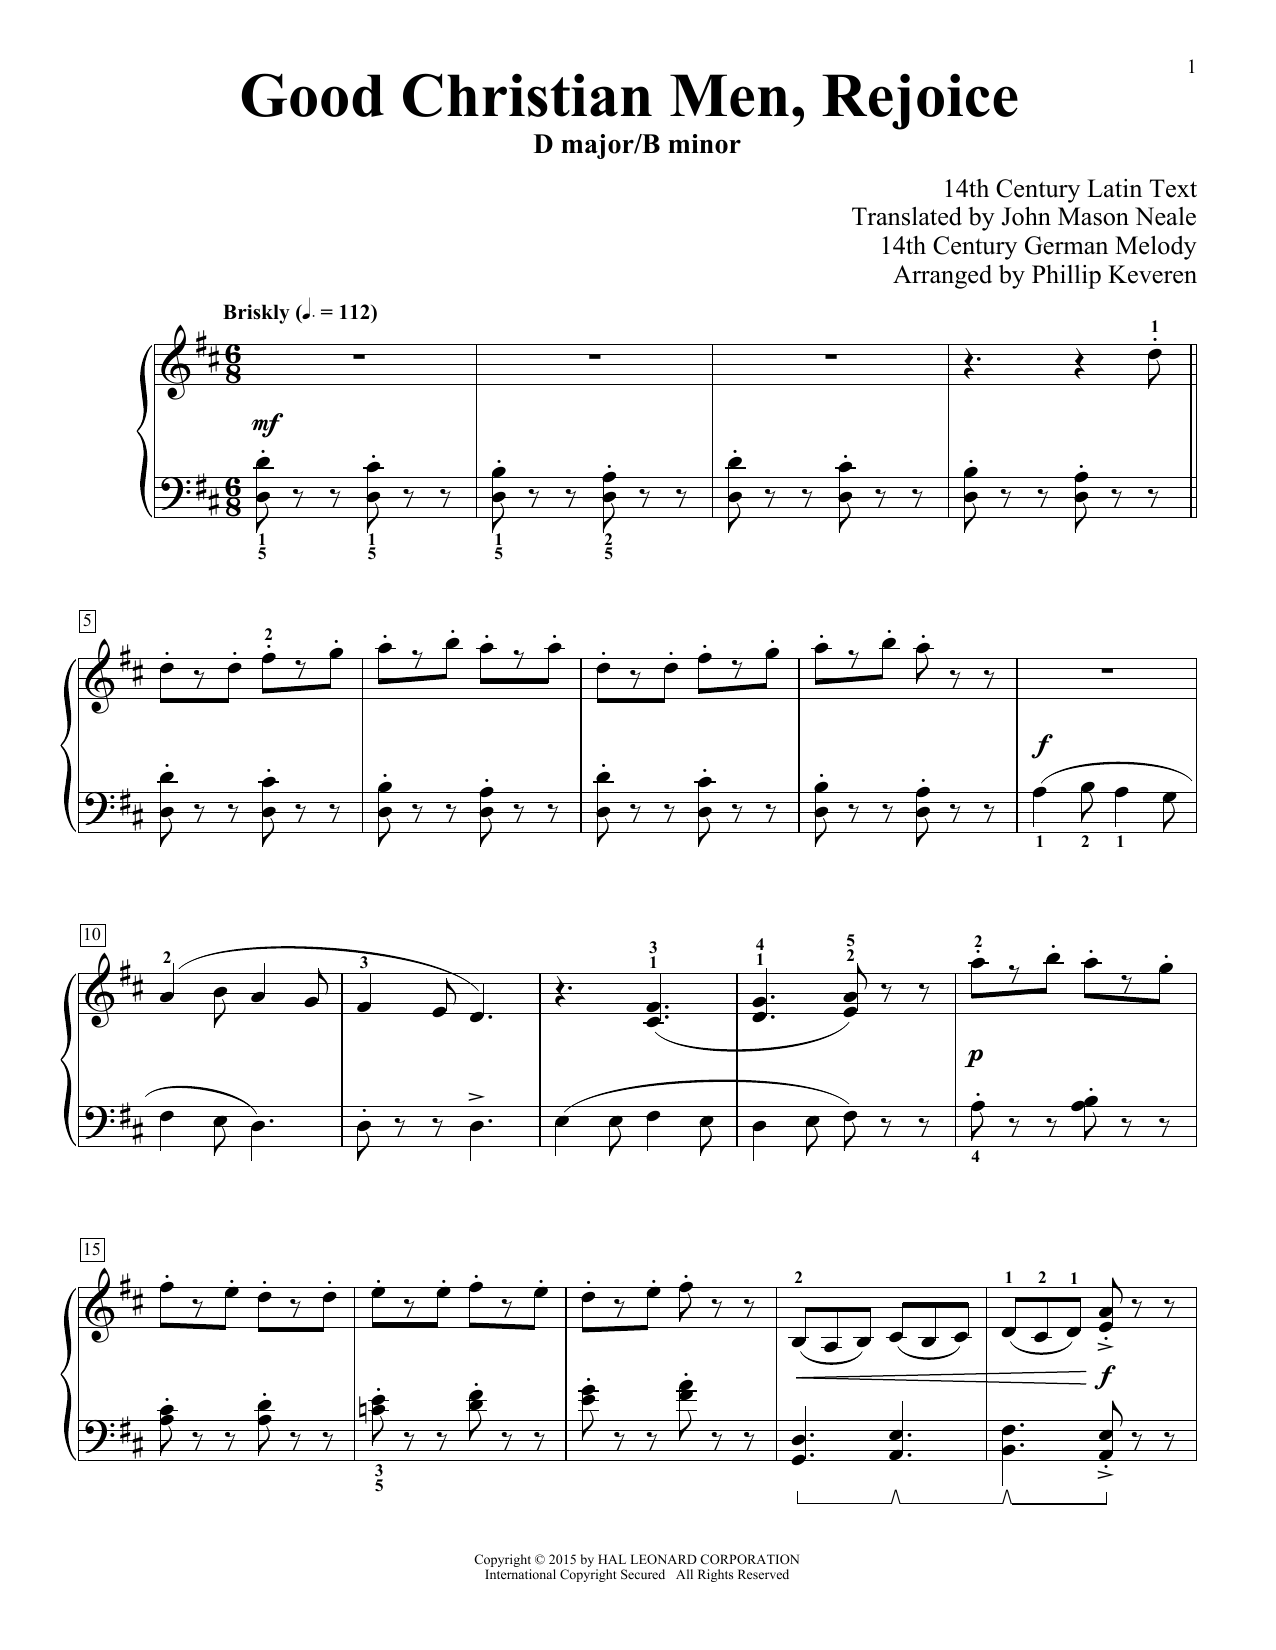 Phillip Keveren Good Christian Men, Rejoice Sheet Music Notes & Chords for Piano - Download or Print PDF